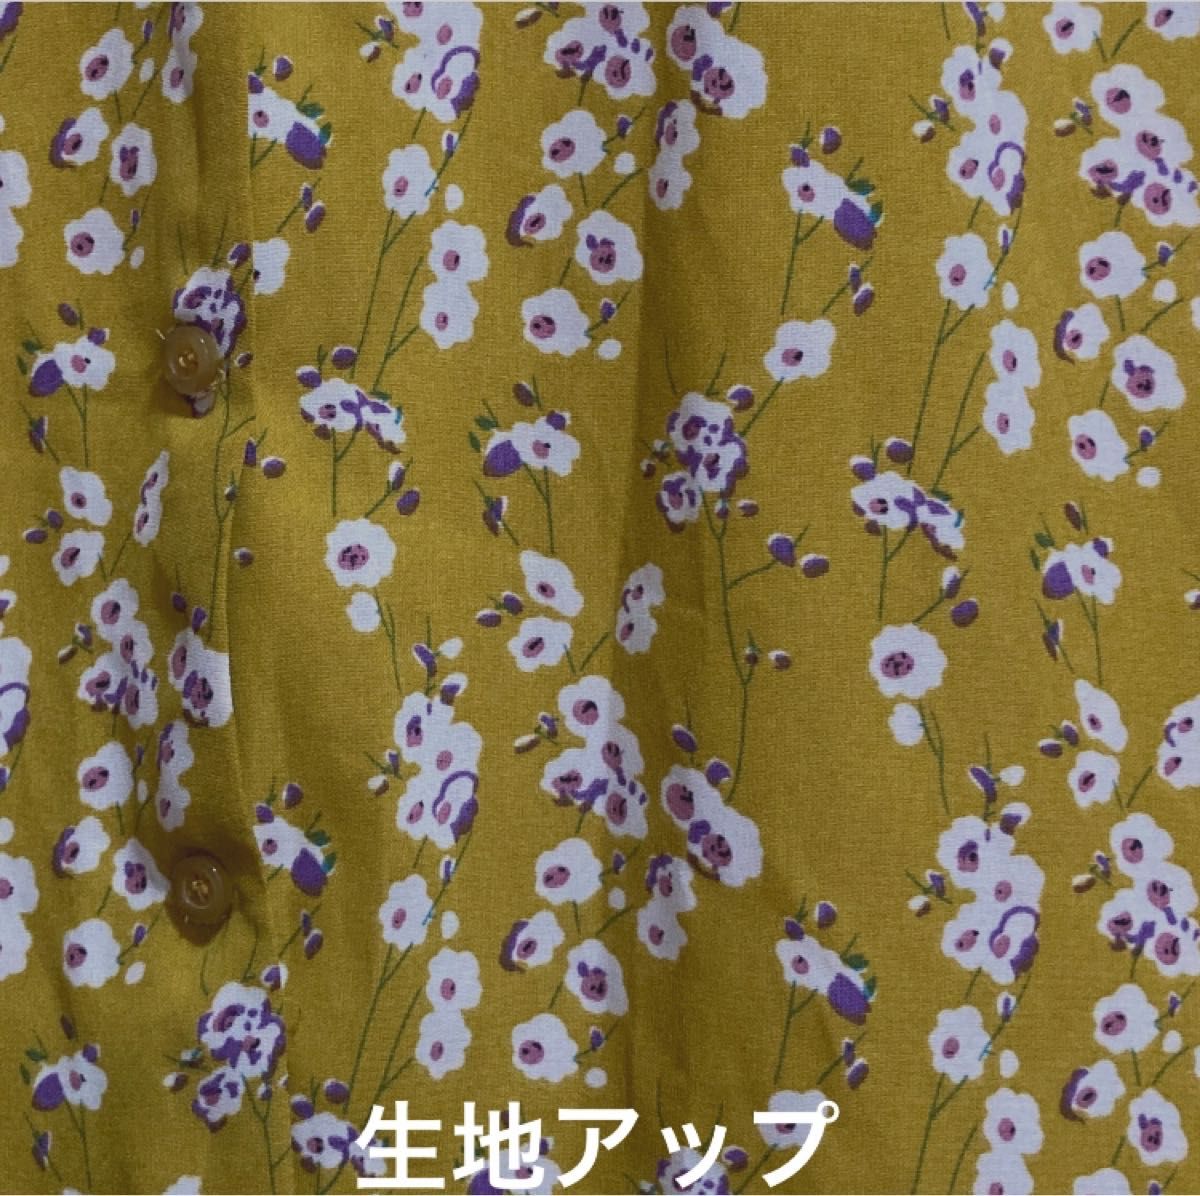 aquagarage 羽織にもなるレトロぼかし花柄のロングフレアワンピース